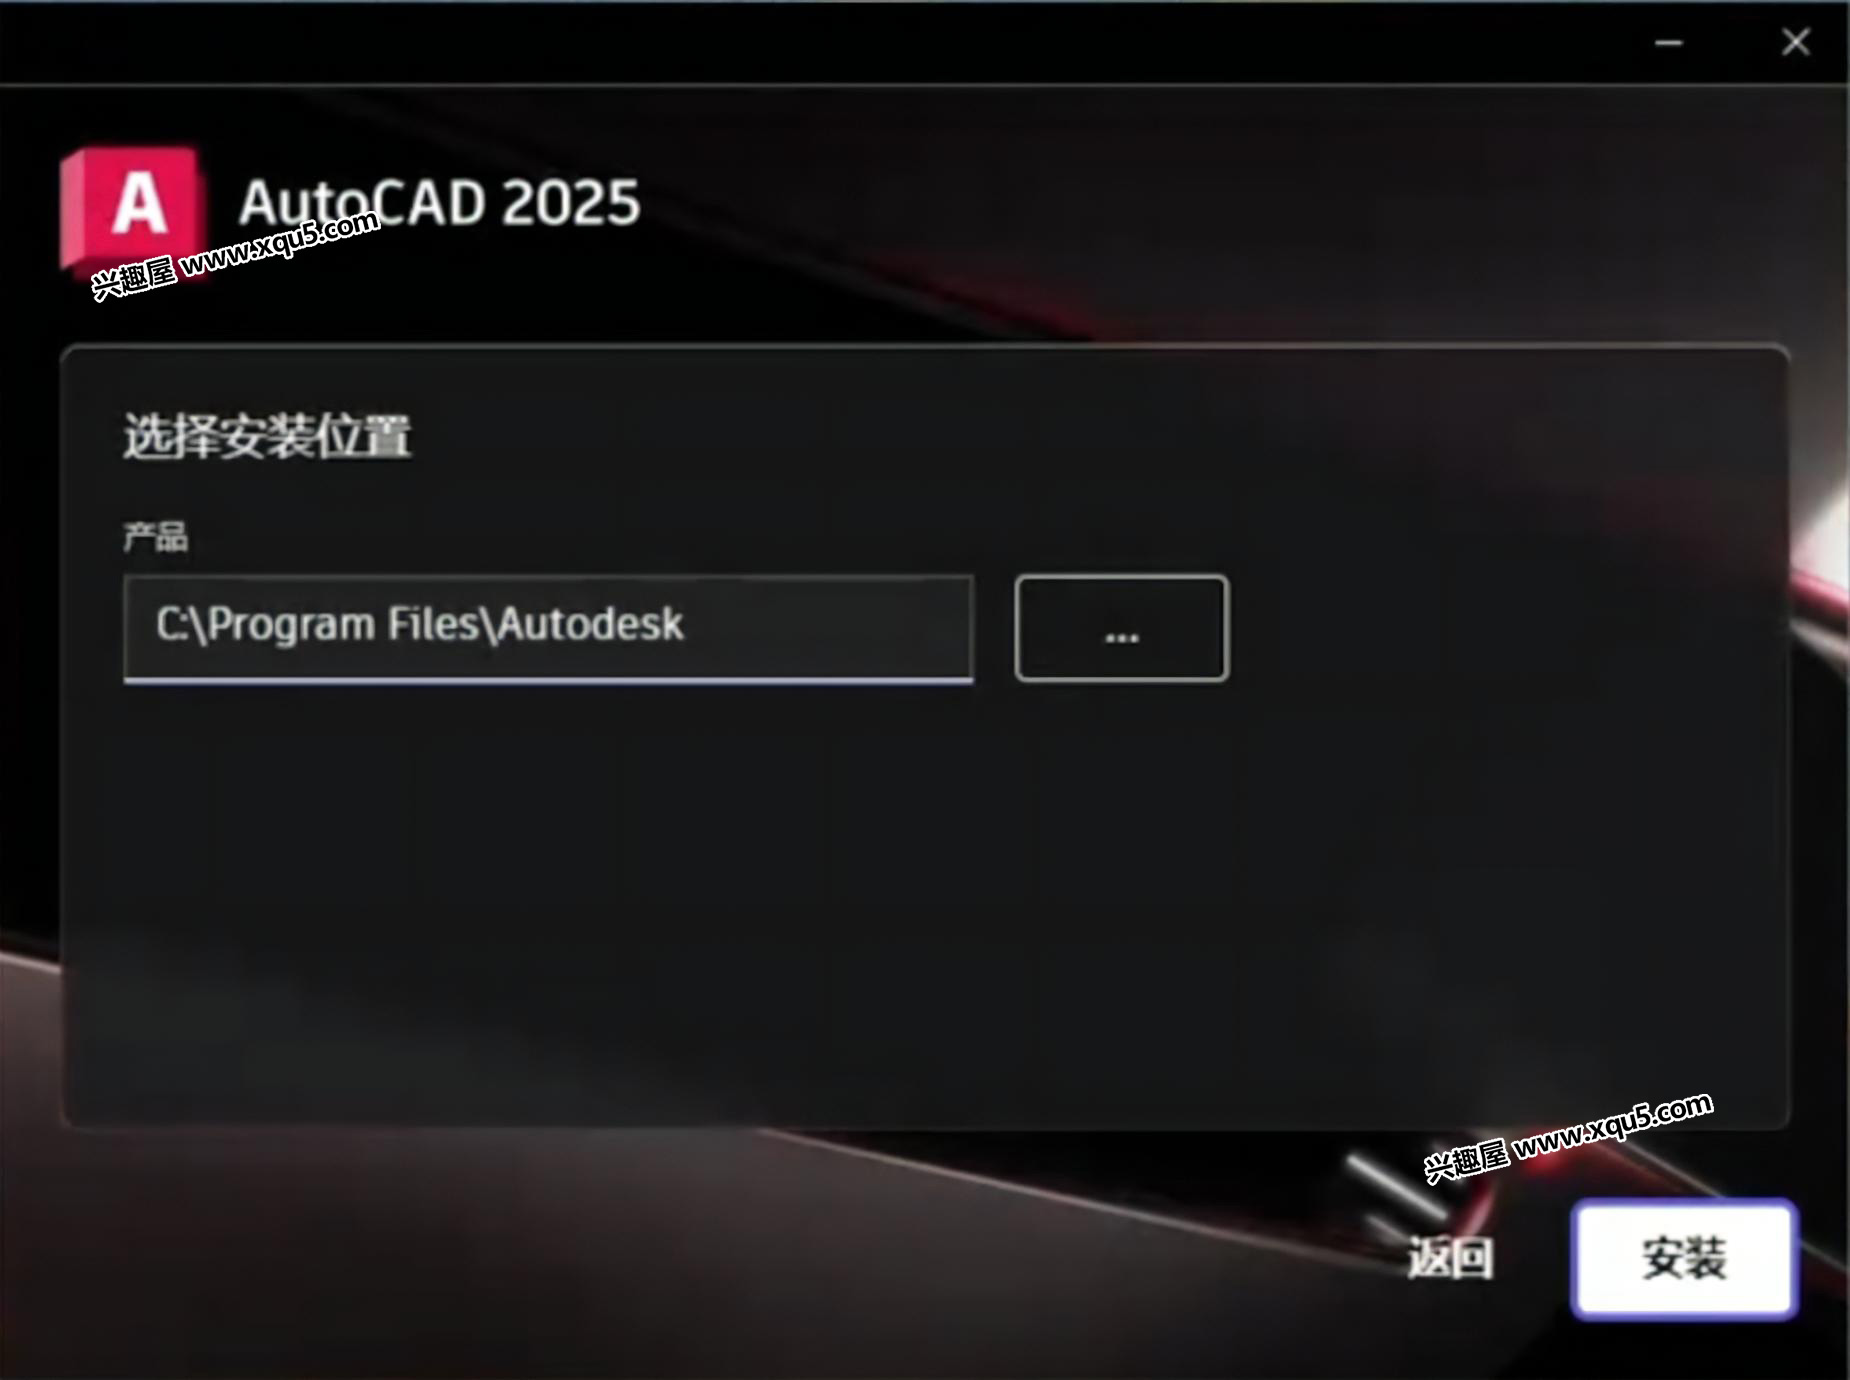 AutoCAD-2025-1.jpg